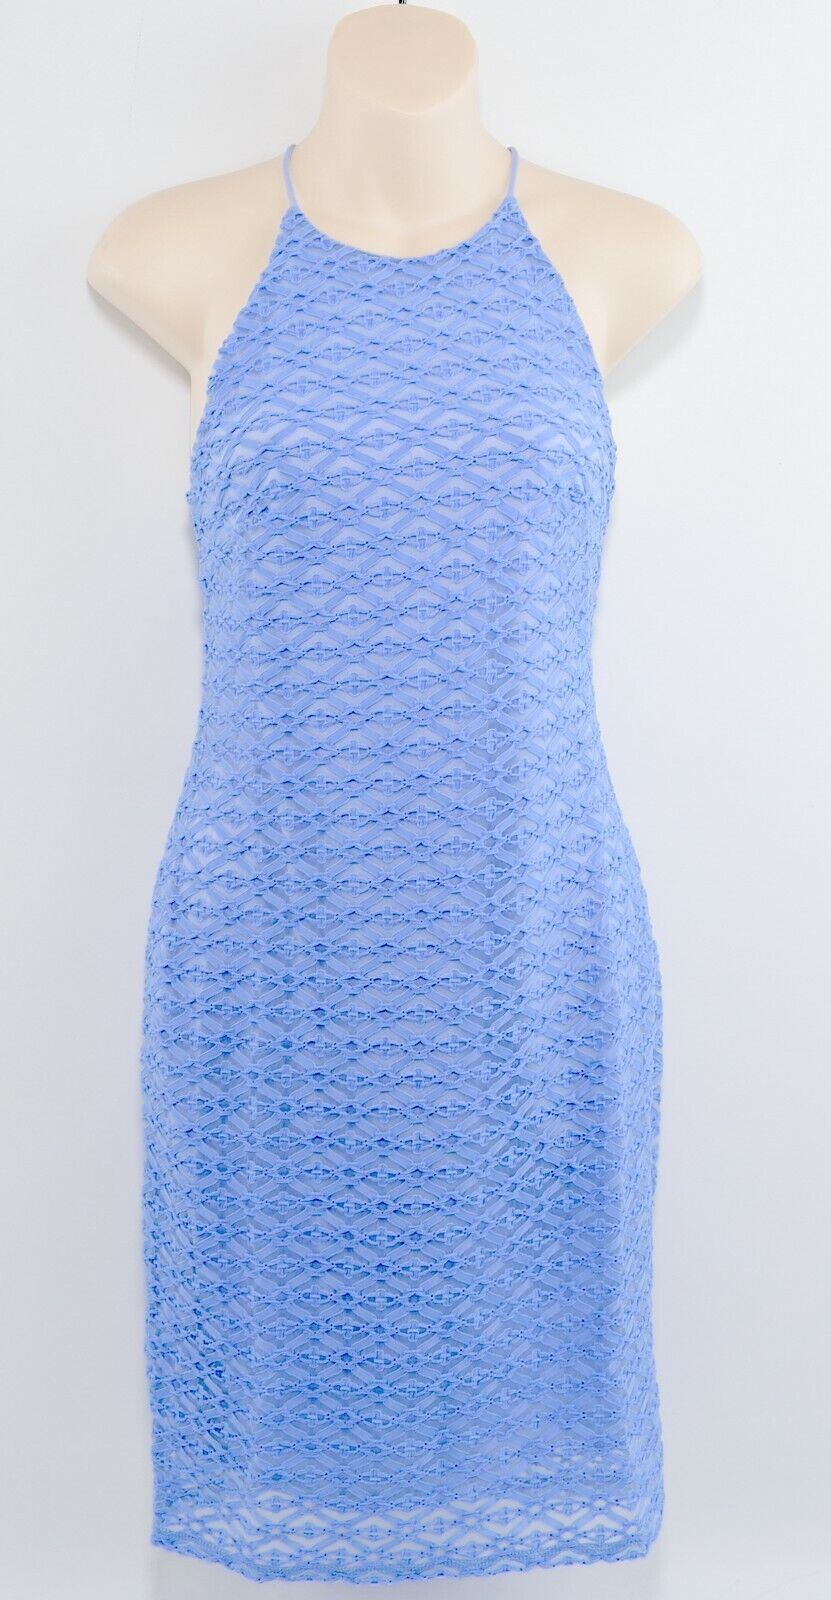 MISS SELFRIDGE Women's 90' Neck Bodycon Dress, Lavender Blue, size UK 12